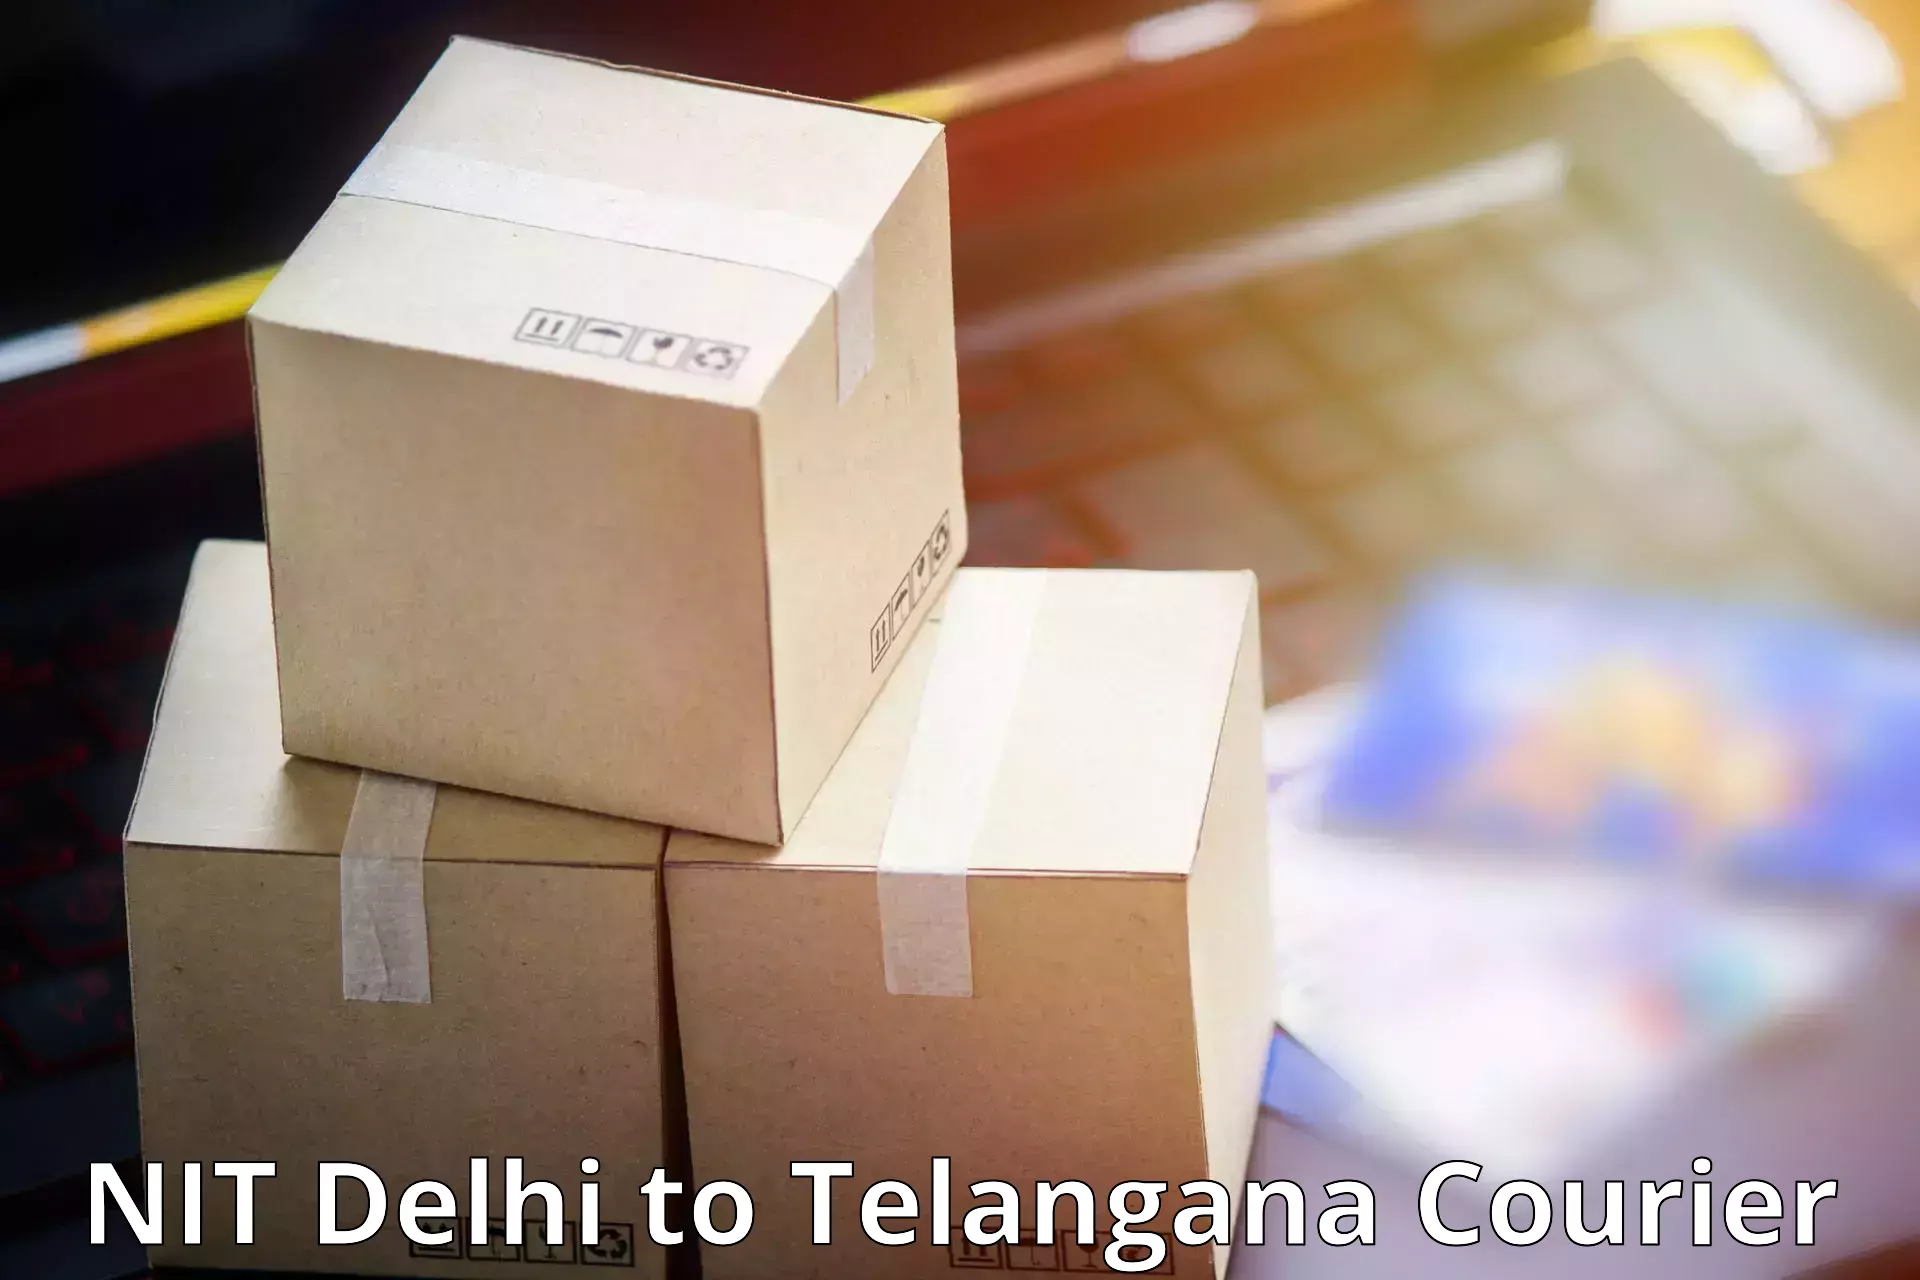 Affordable parcel service NIT Delhi to IIT Hyderabad